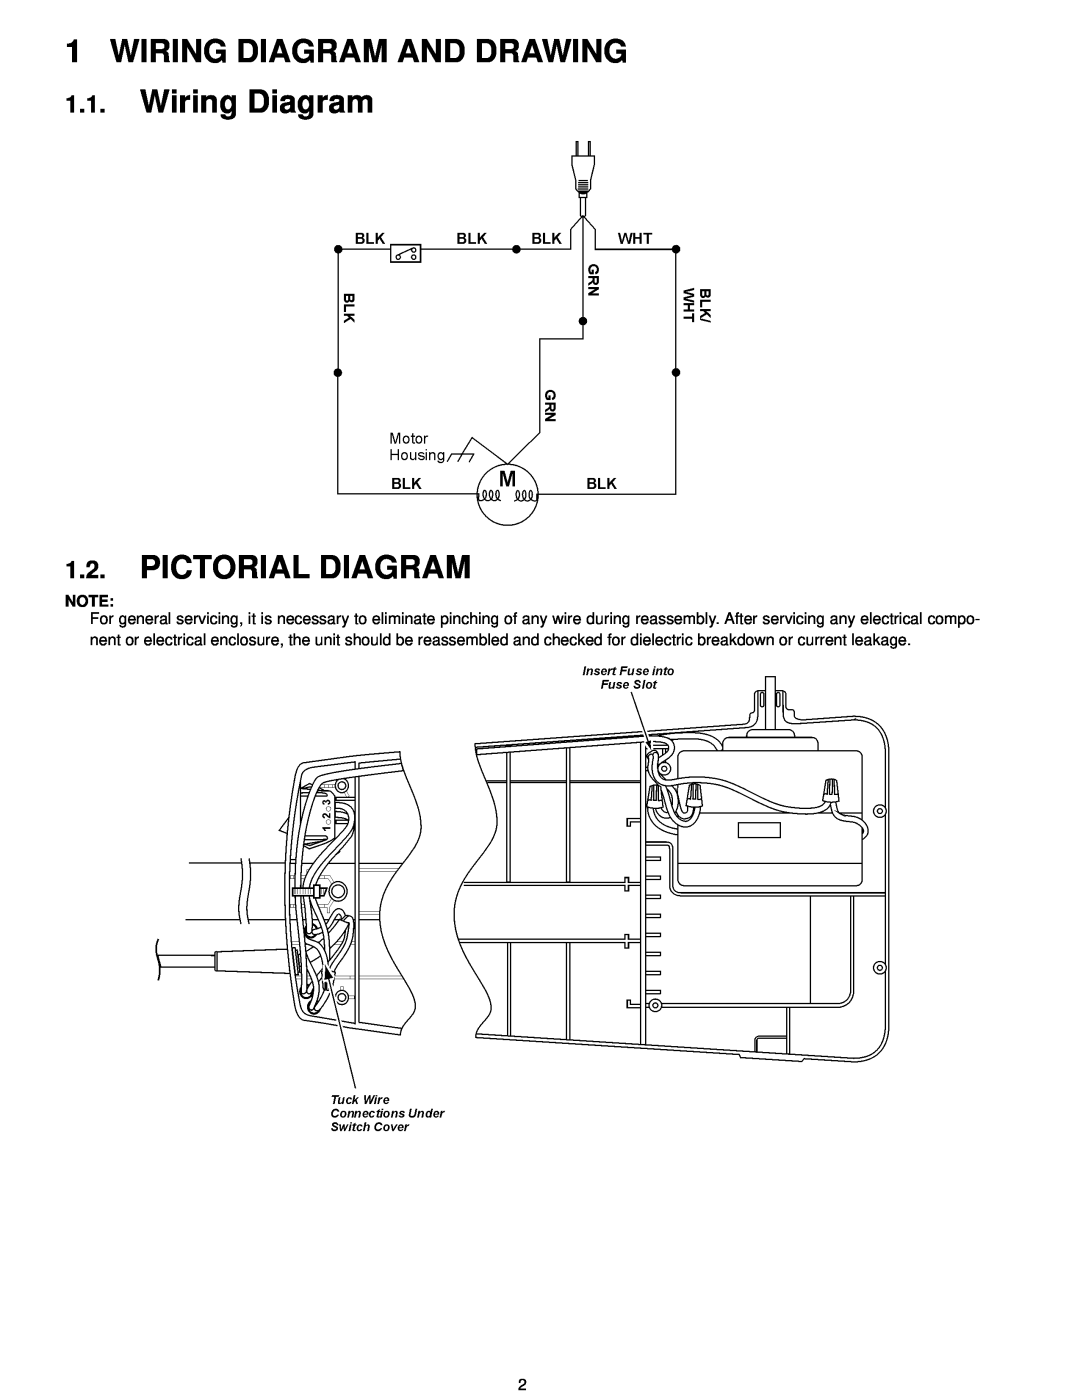 Panasonic MC-V5210-00 specifications WIRING DIAGRAM AND DRAWING 1.1.Wiring Diagram, Pictorial Diagram 